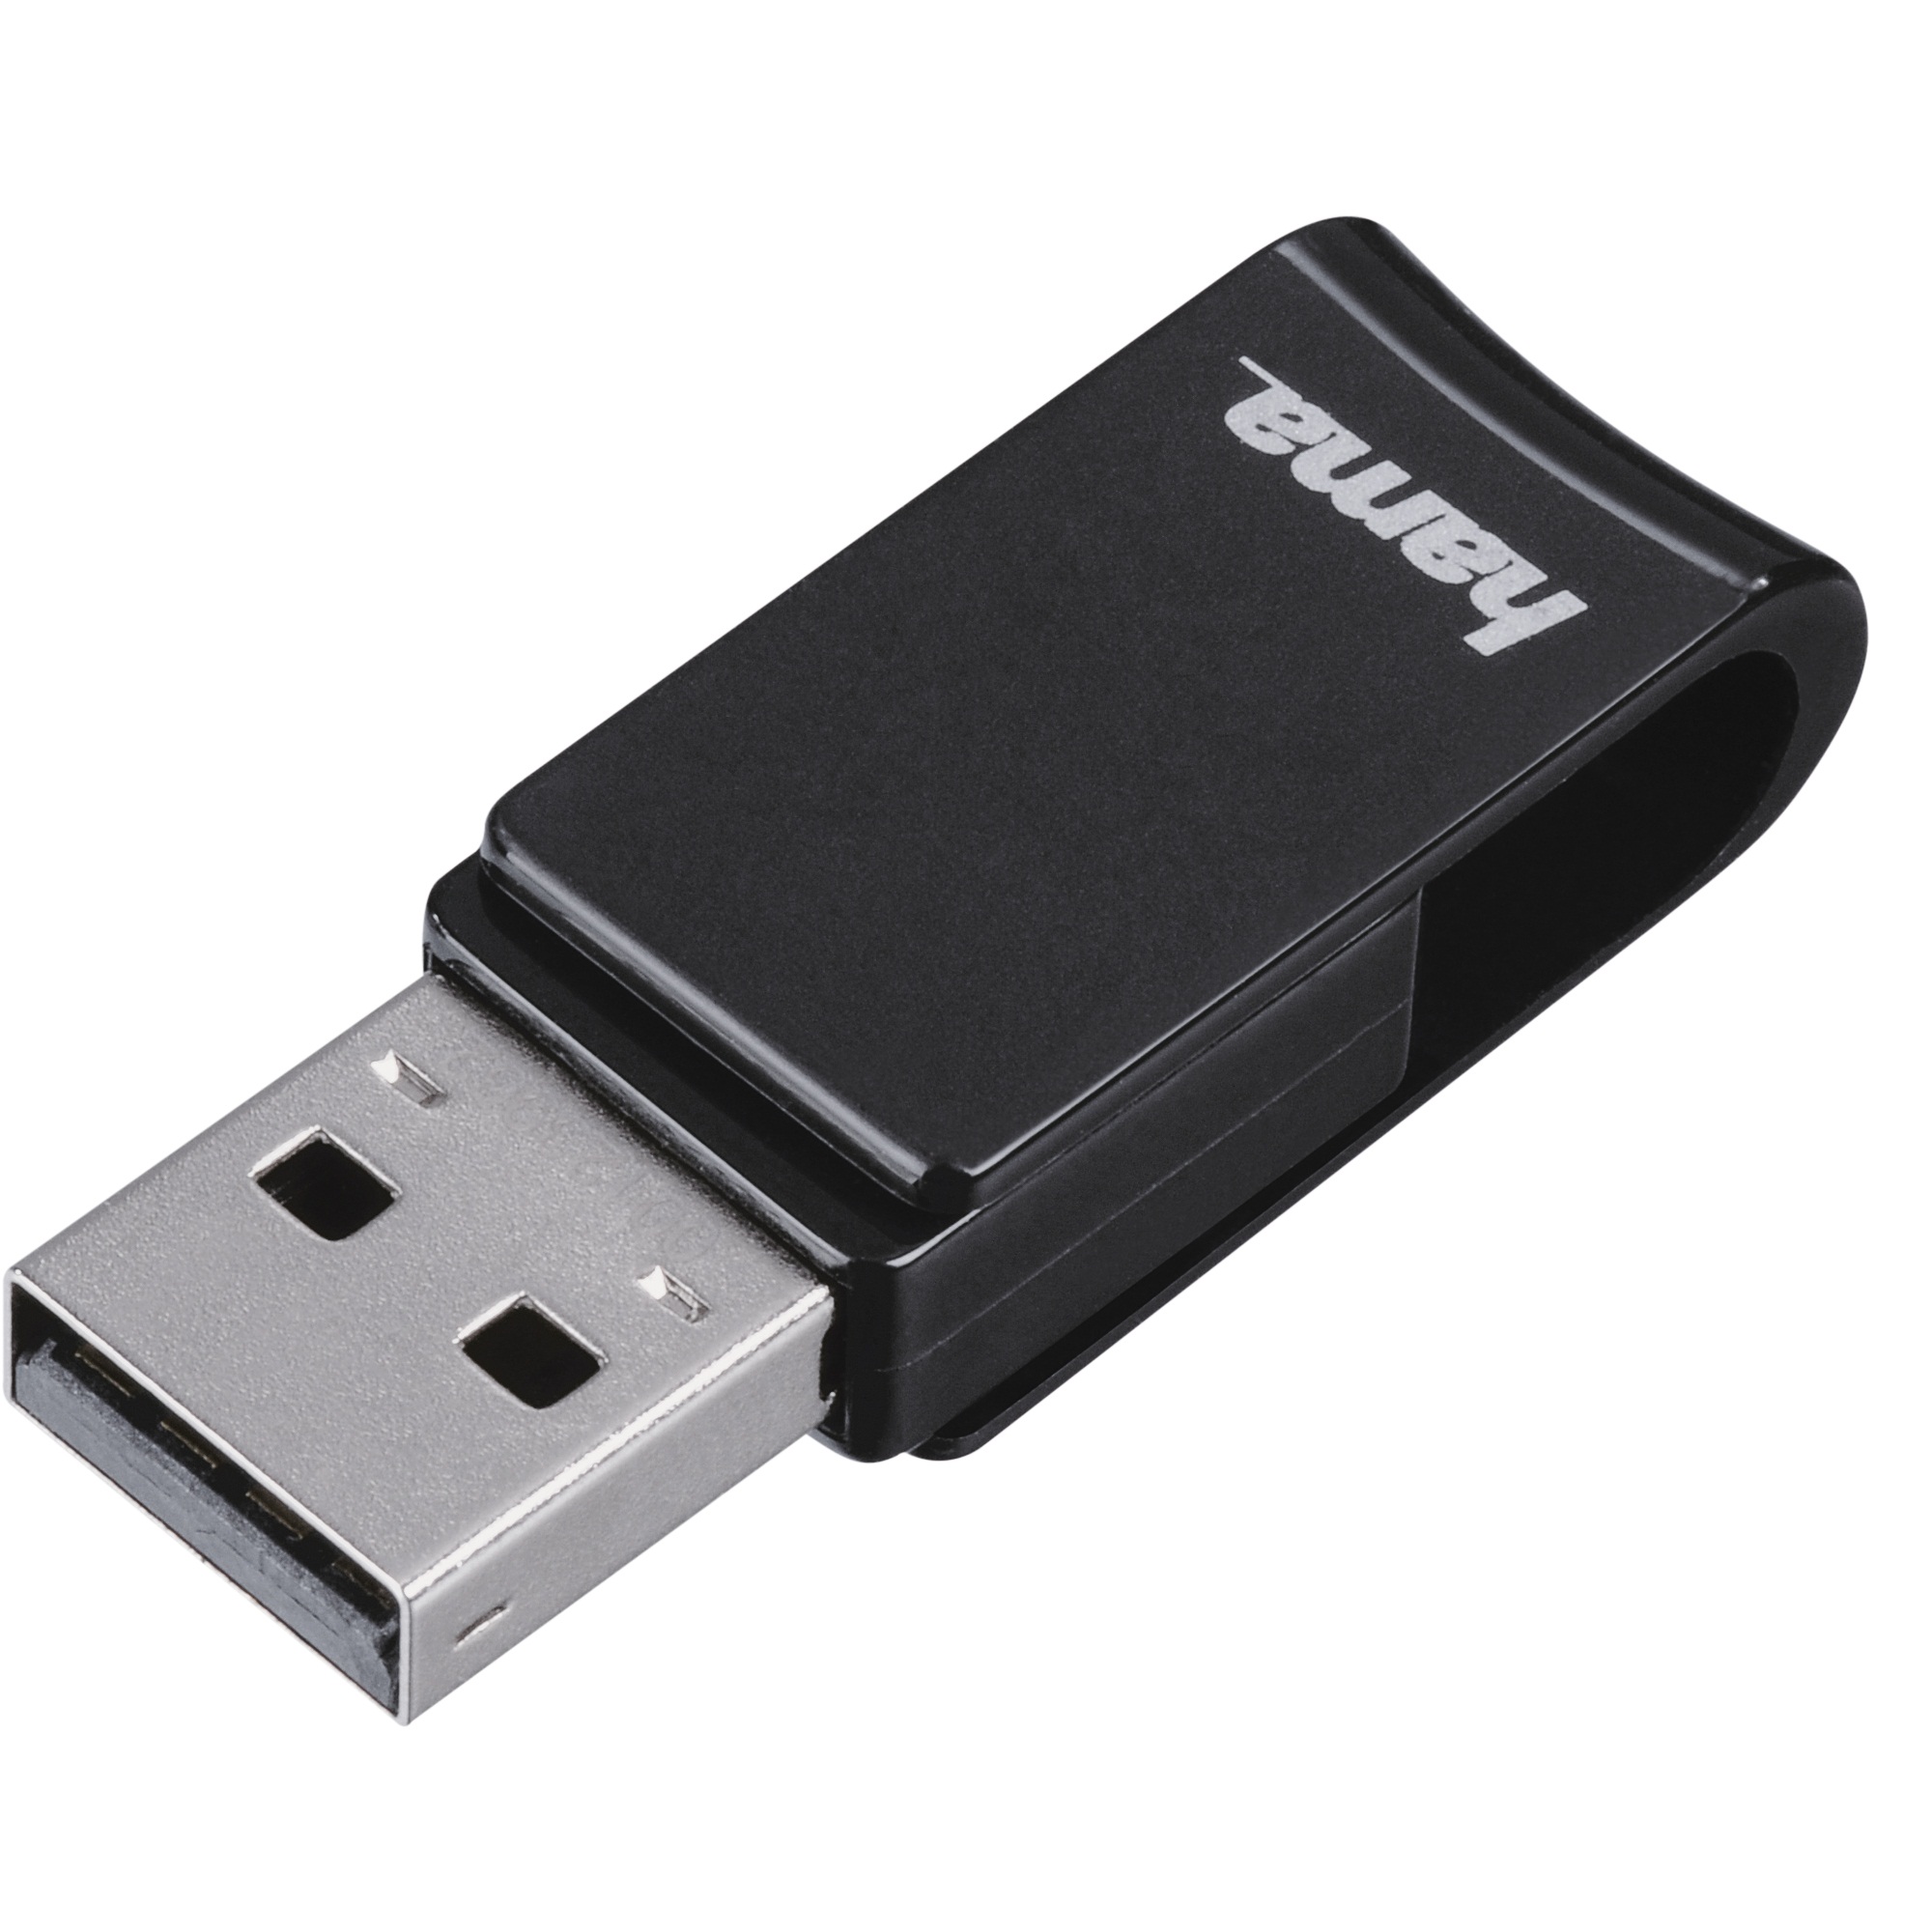  Memorie USB Hama Turn 123960, 8GB, USB 2.0, Negru 